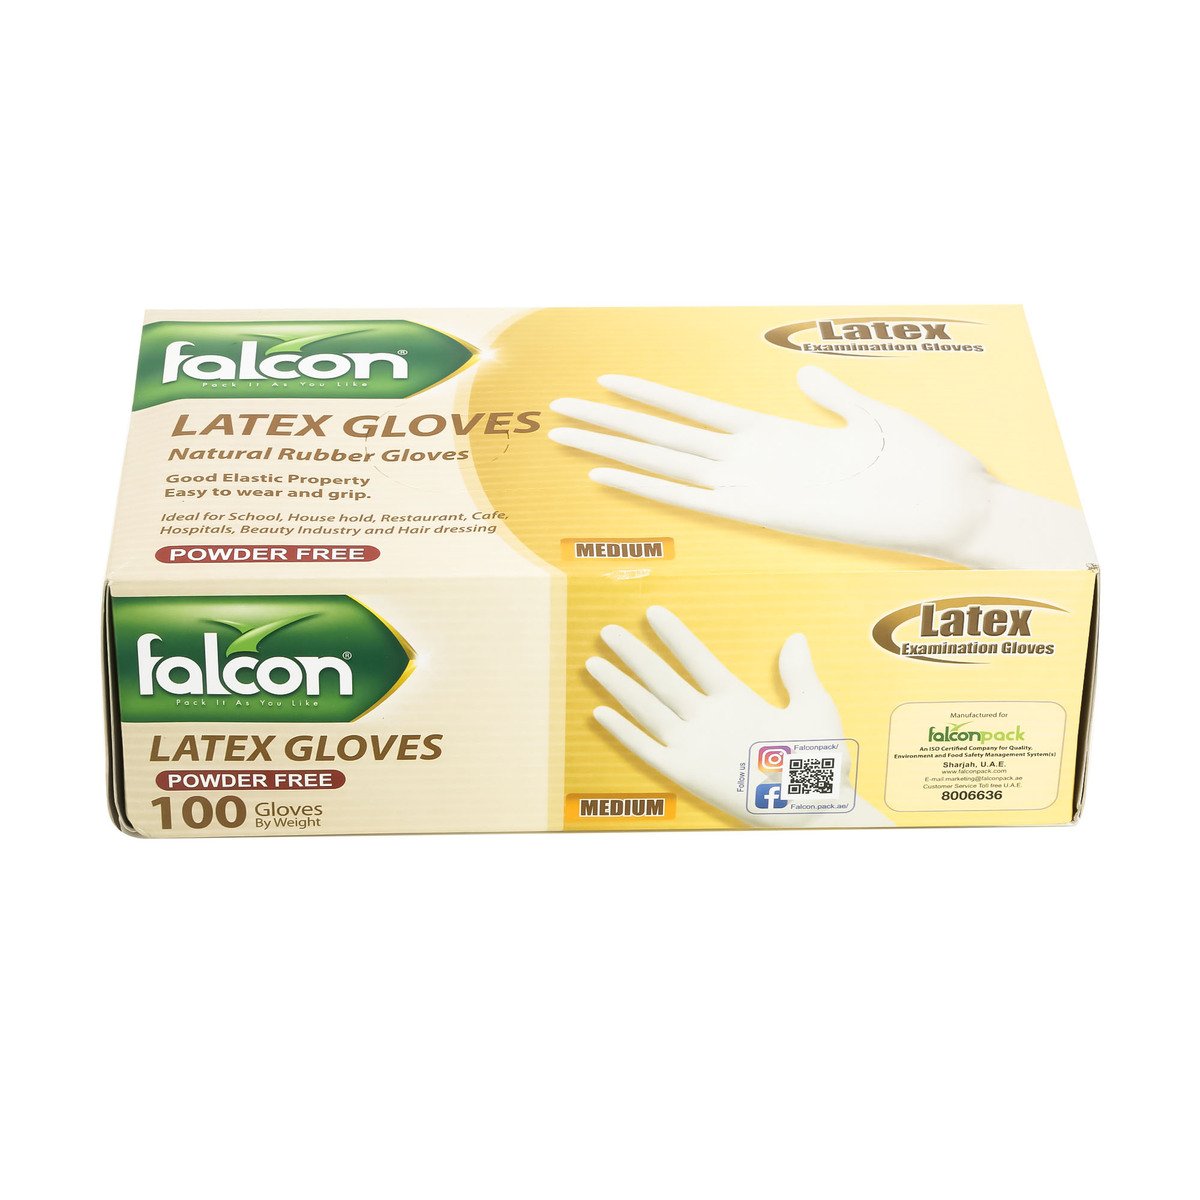 Falcon Latex Gloves Powder Free Medium 100pcs